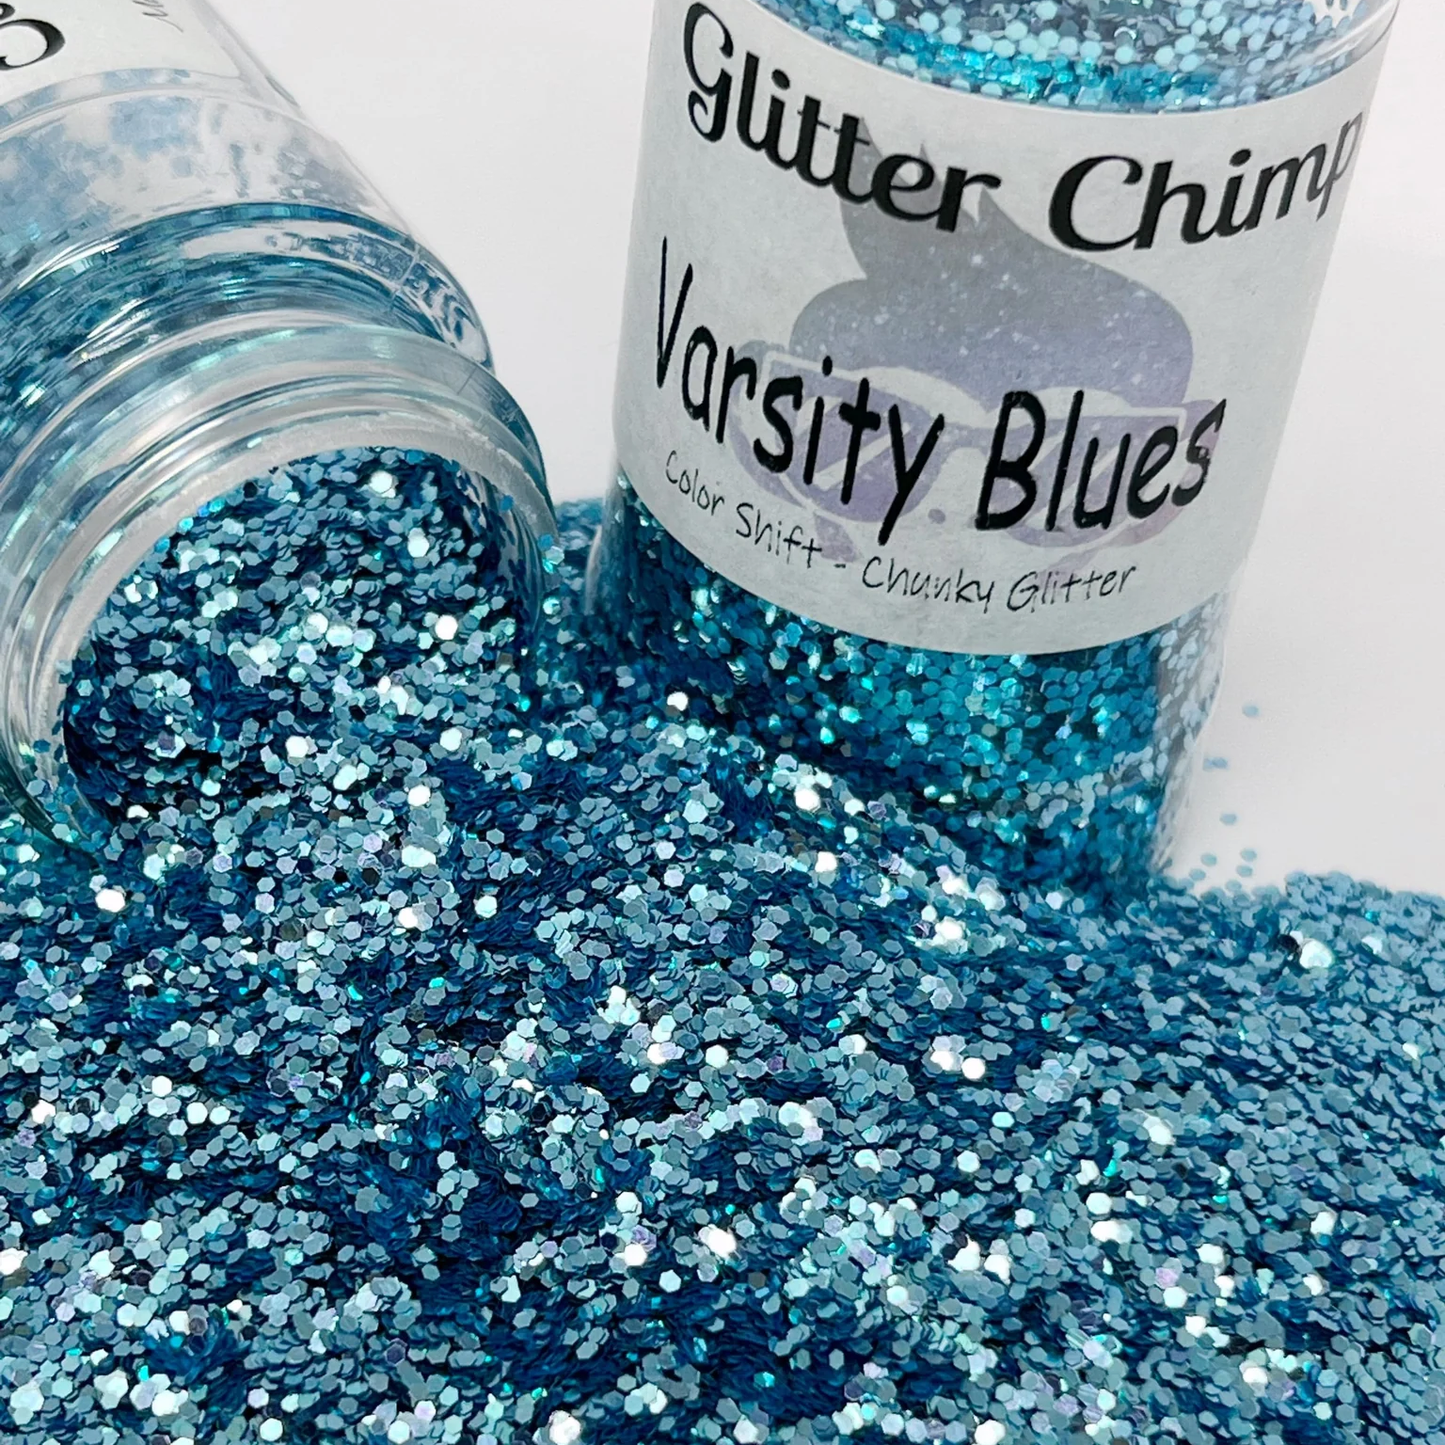 Glitter Chimp Varsity Blues - Chunky Color Shifting Glitter